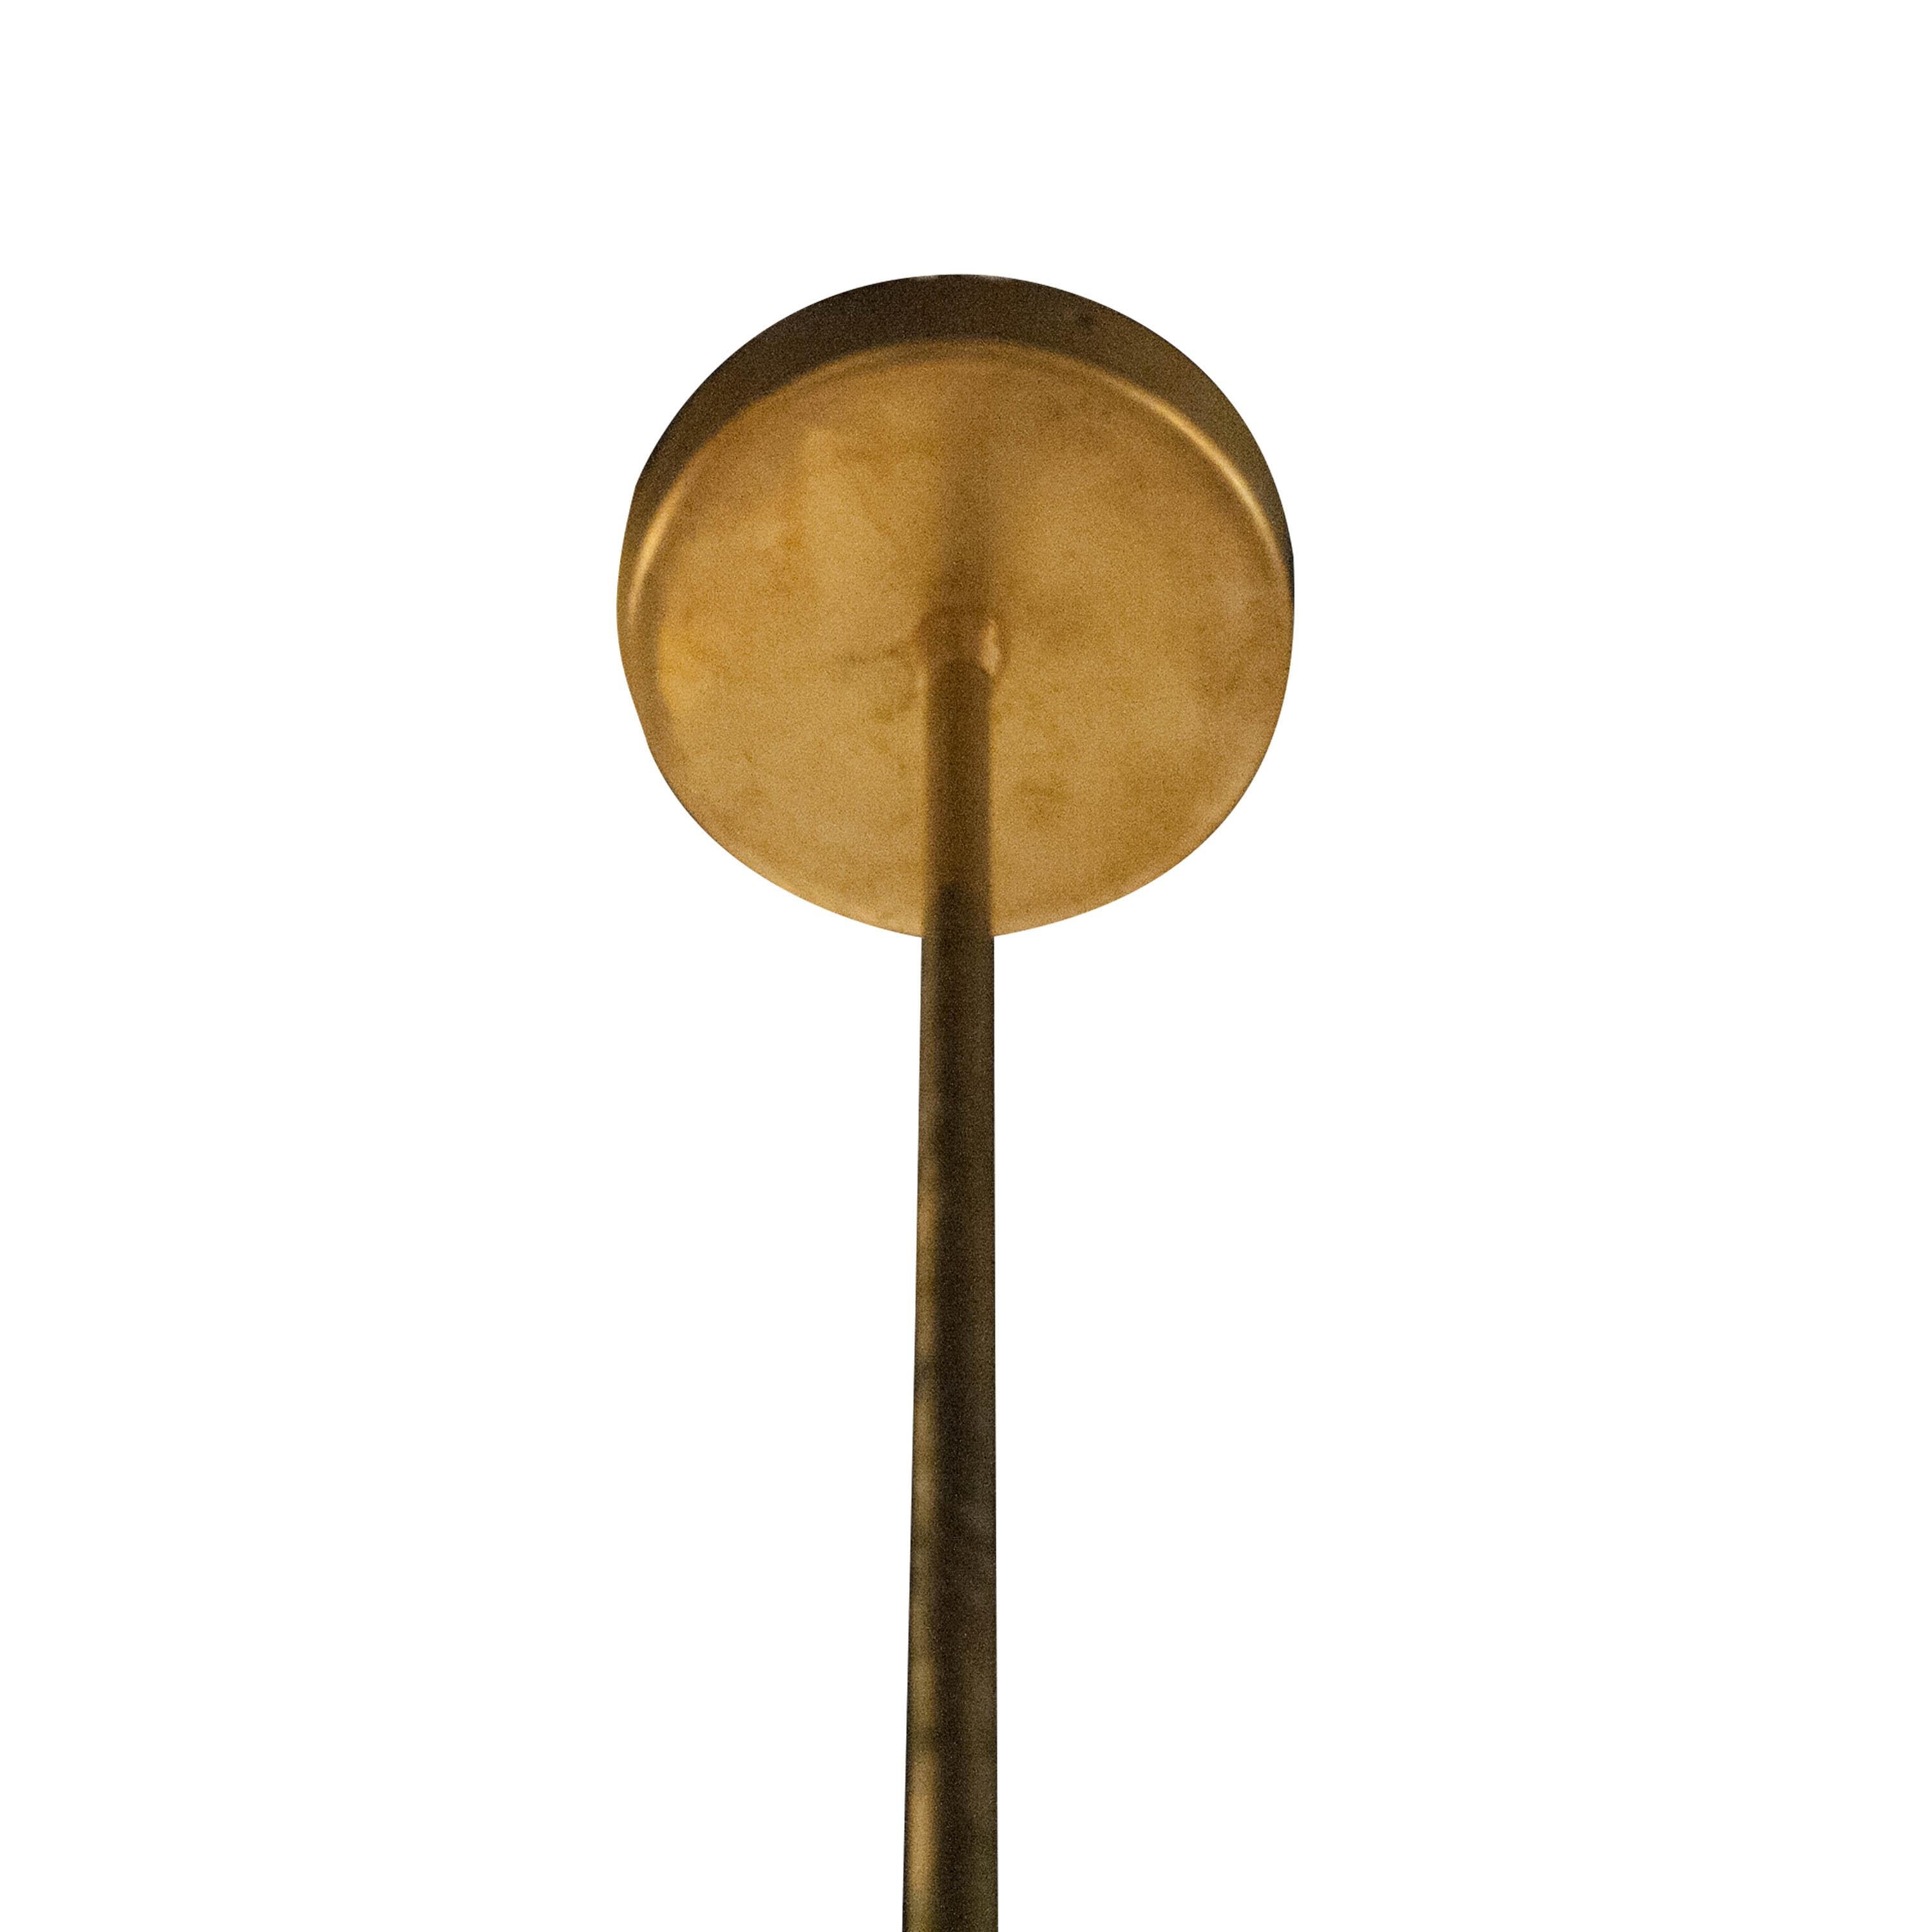  IKB191 Contemporary Sputnik Style Brass Glass Suspension Lamp, Spain, 2020 For Sale 2